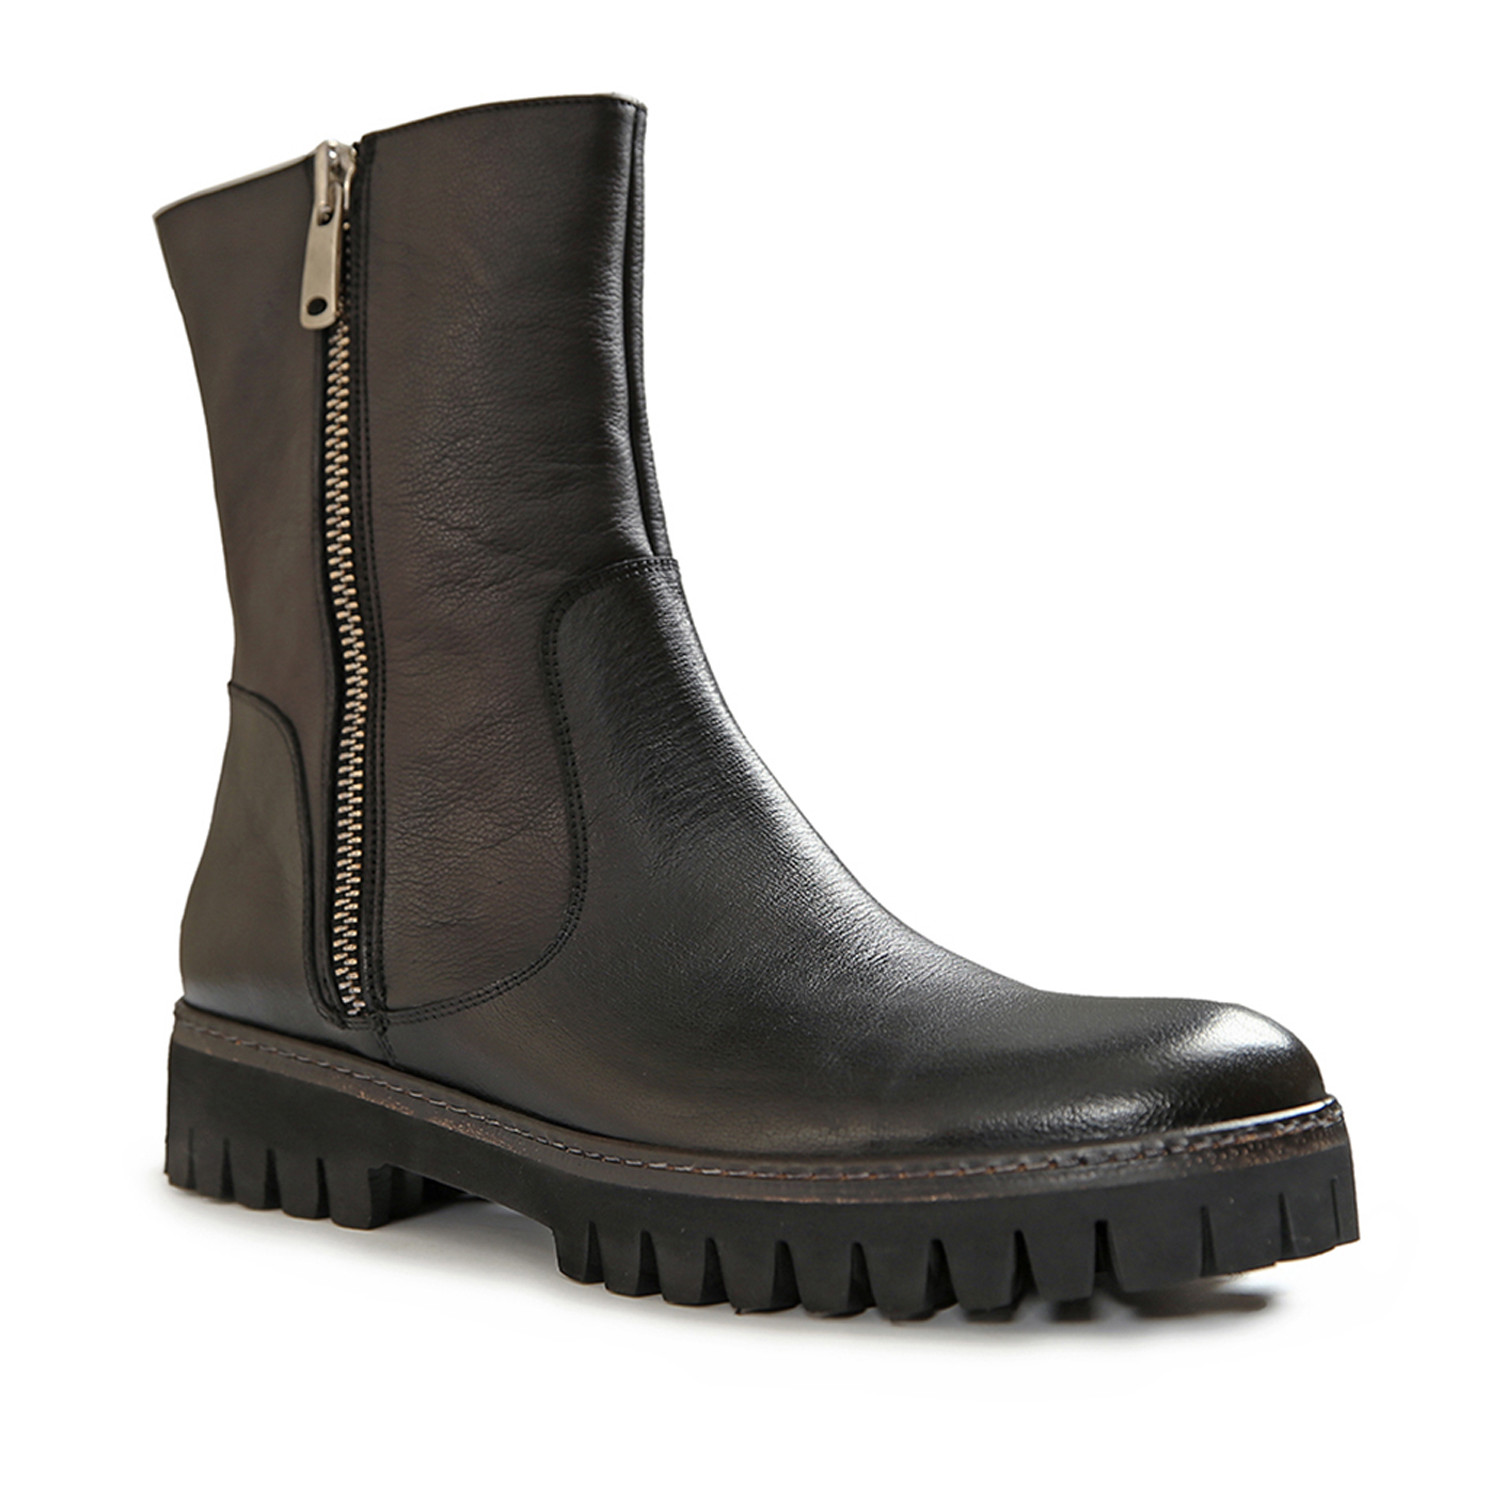 mario rain boots